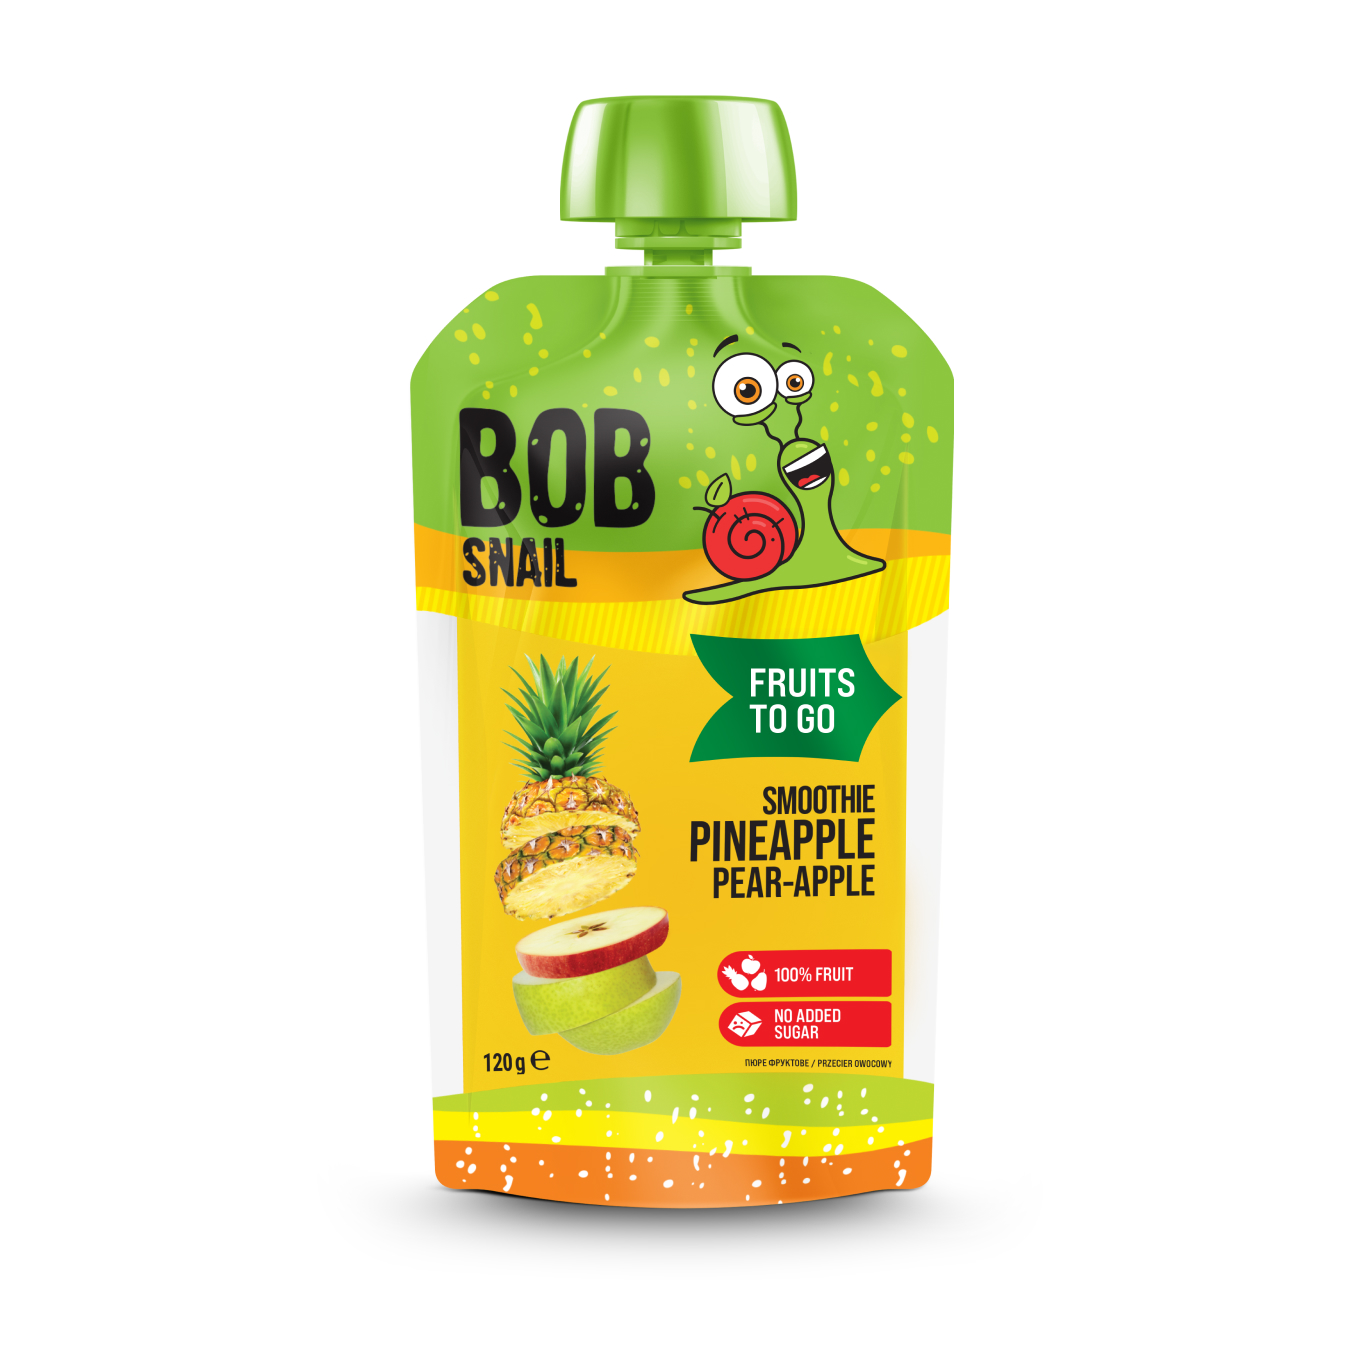 Bob Snail fruit puree Smoothie Pineapple-Pear-Apple 120g